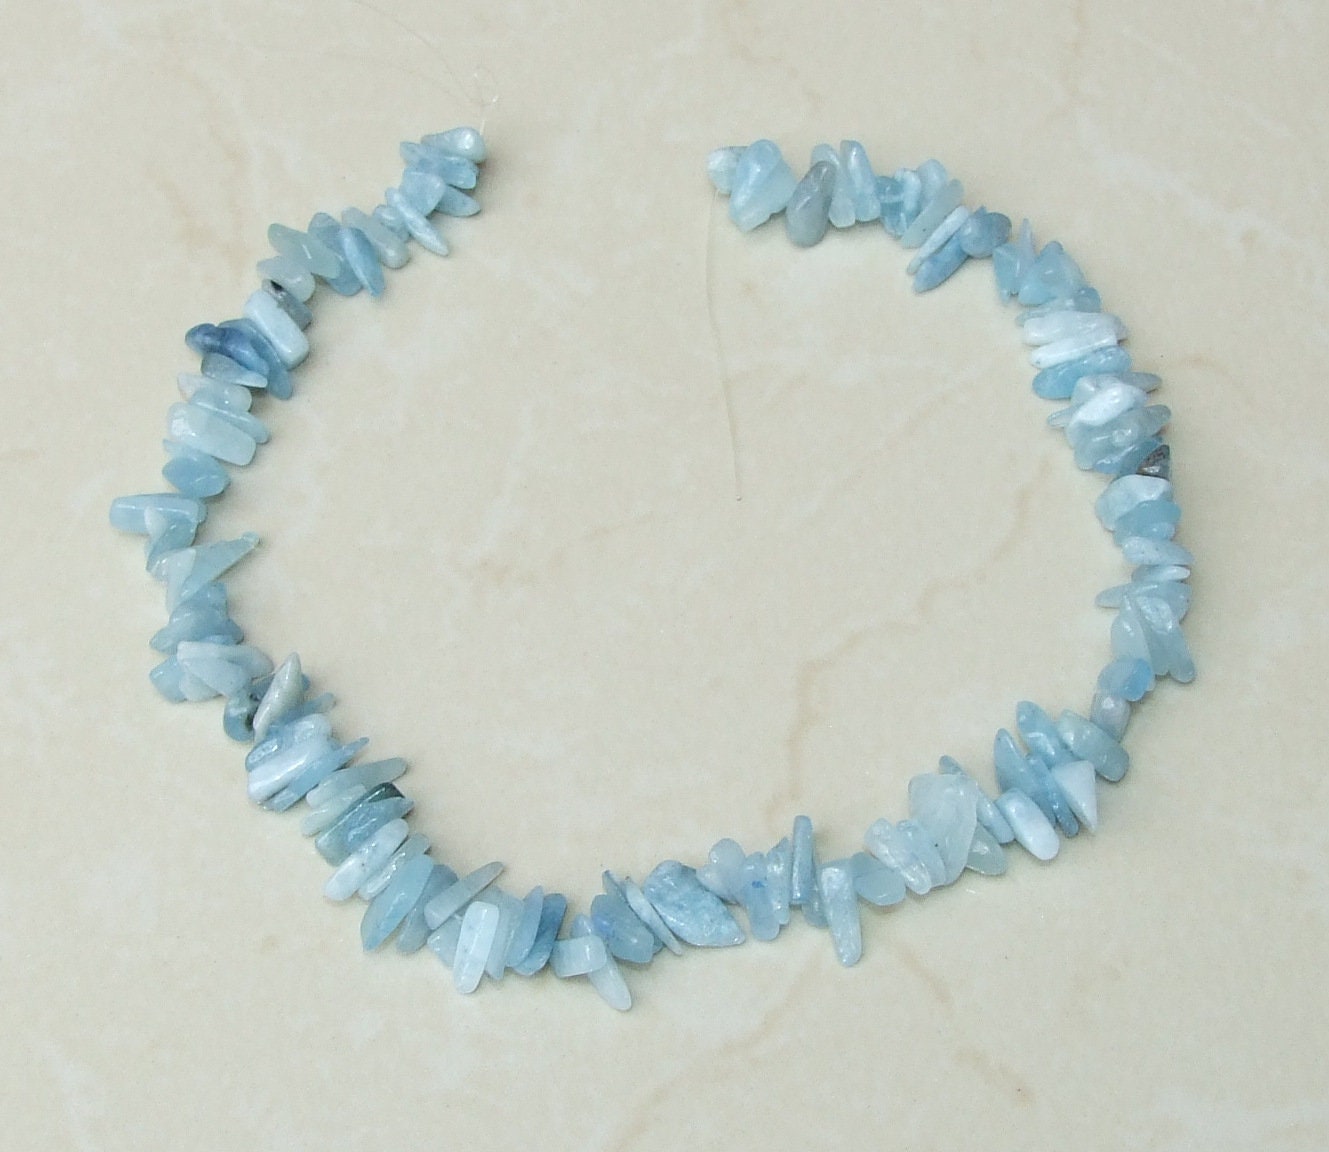 Aquamarine Chips, Polished Aquamarine, Aquamarine Beads, Gemstone Beads, Jewelry Stones, Natural Aquamarine, 15 inch Strand,  8mm - 20mm AM1